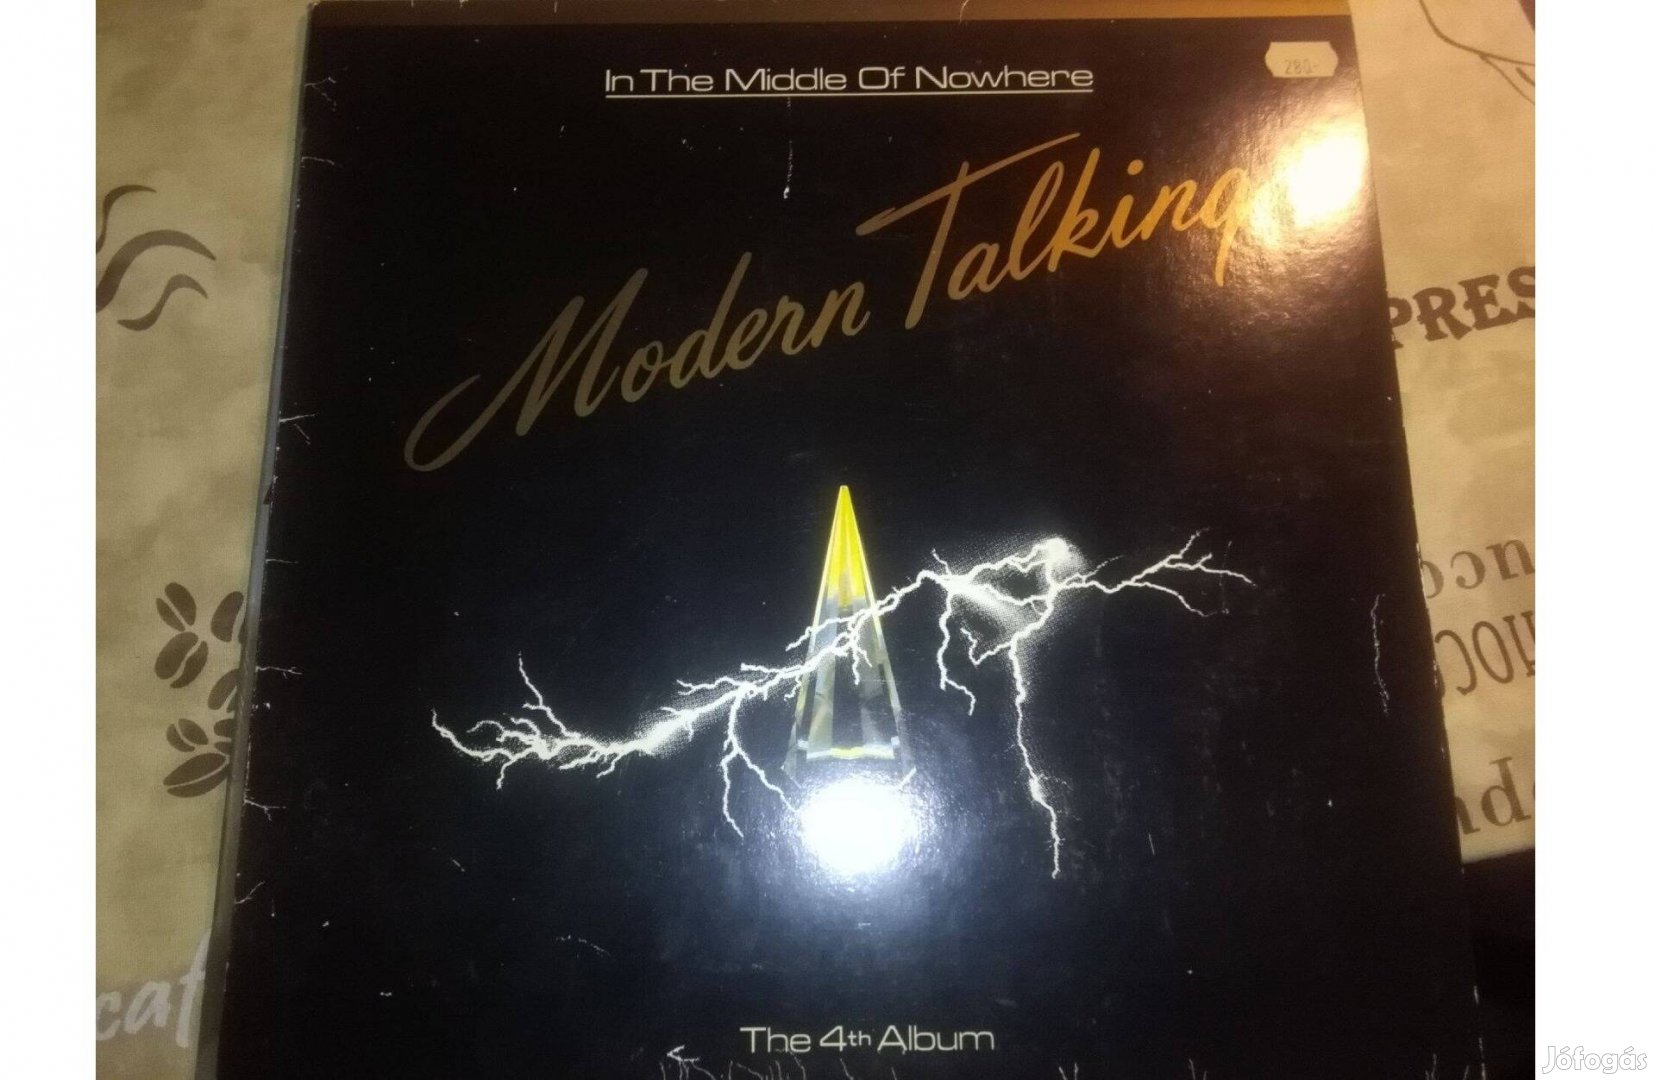 Modern Talking bakelit hanglemezek eladók